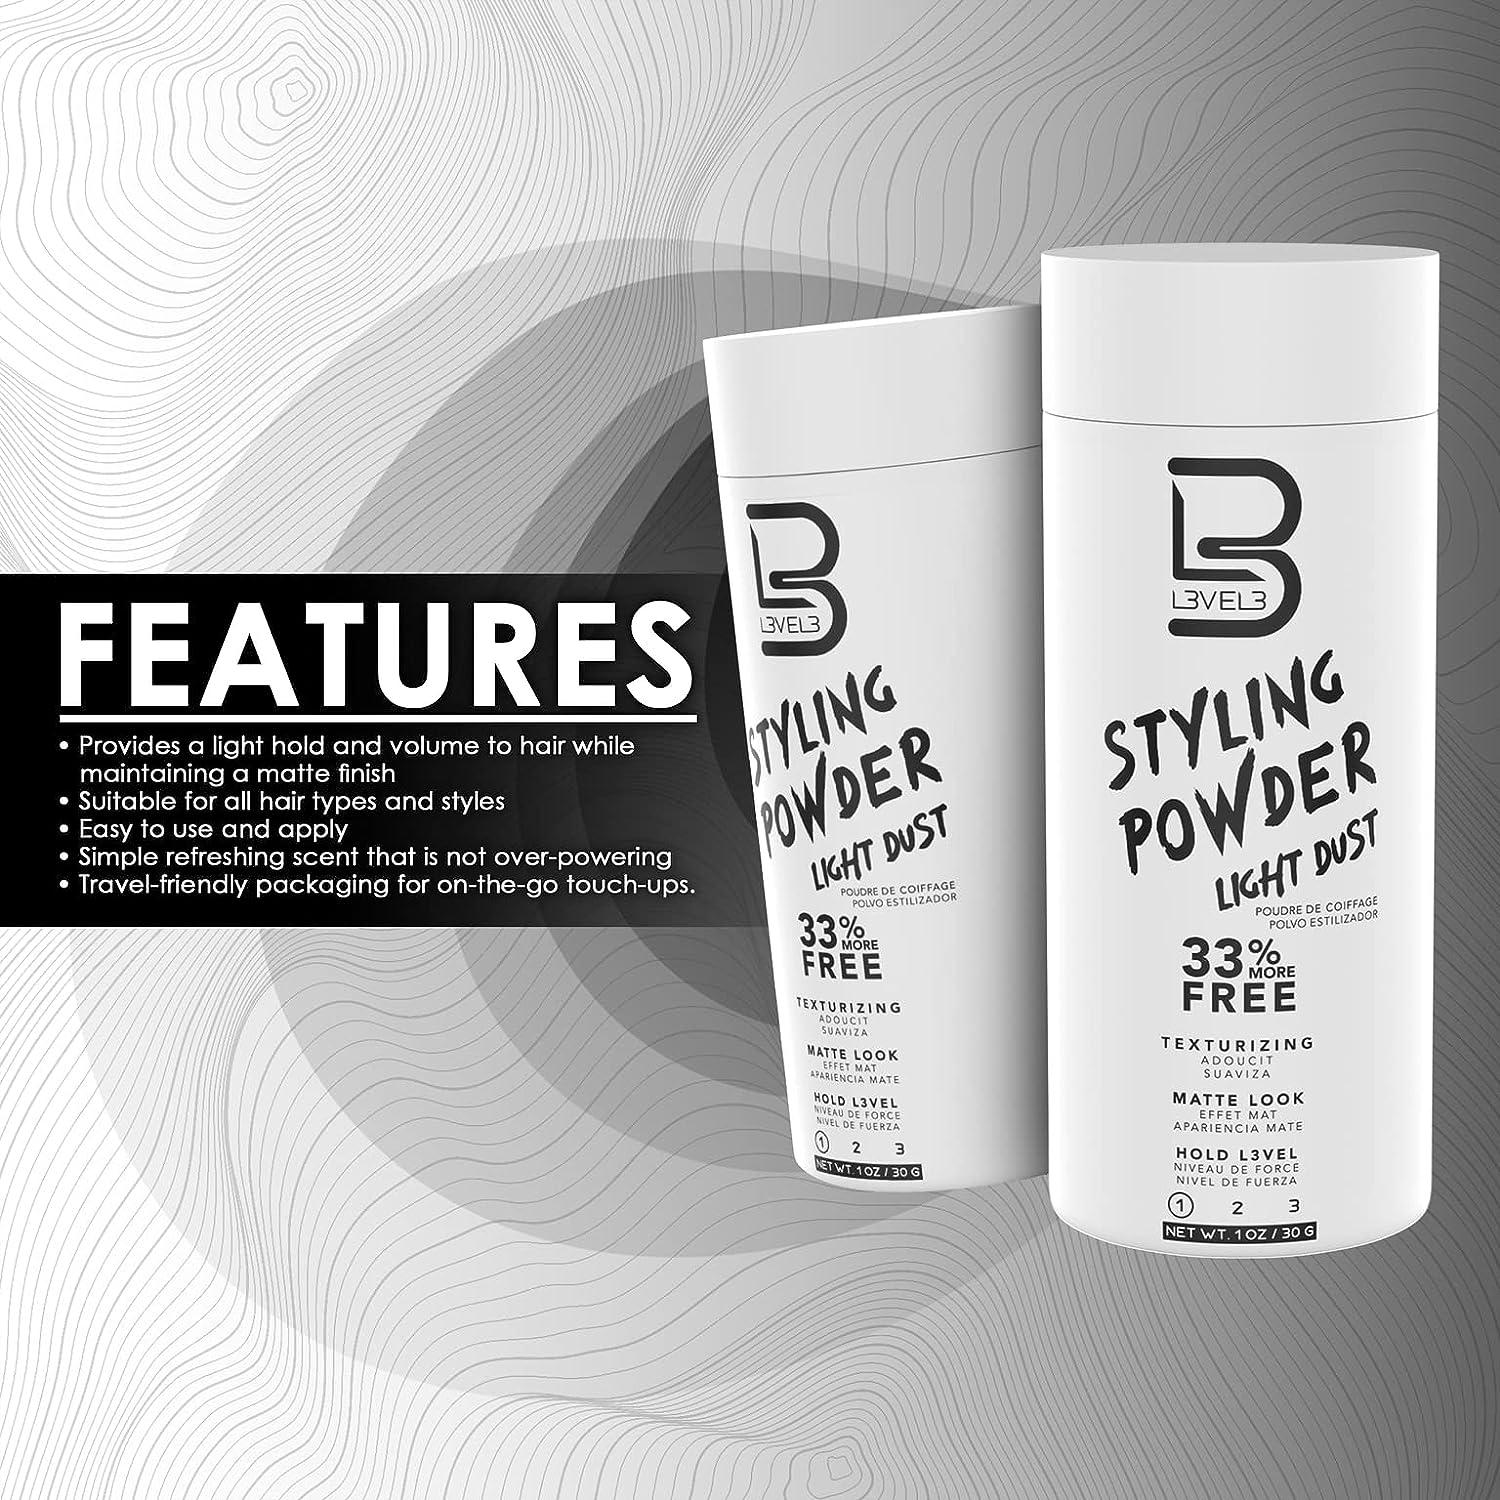 L3 Level 3 Light Hold Styling Powder - Natural Matte Hairstyle -  Texturizing and Volumizing